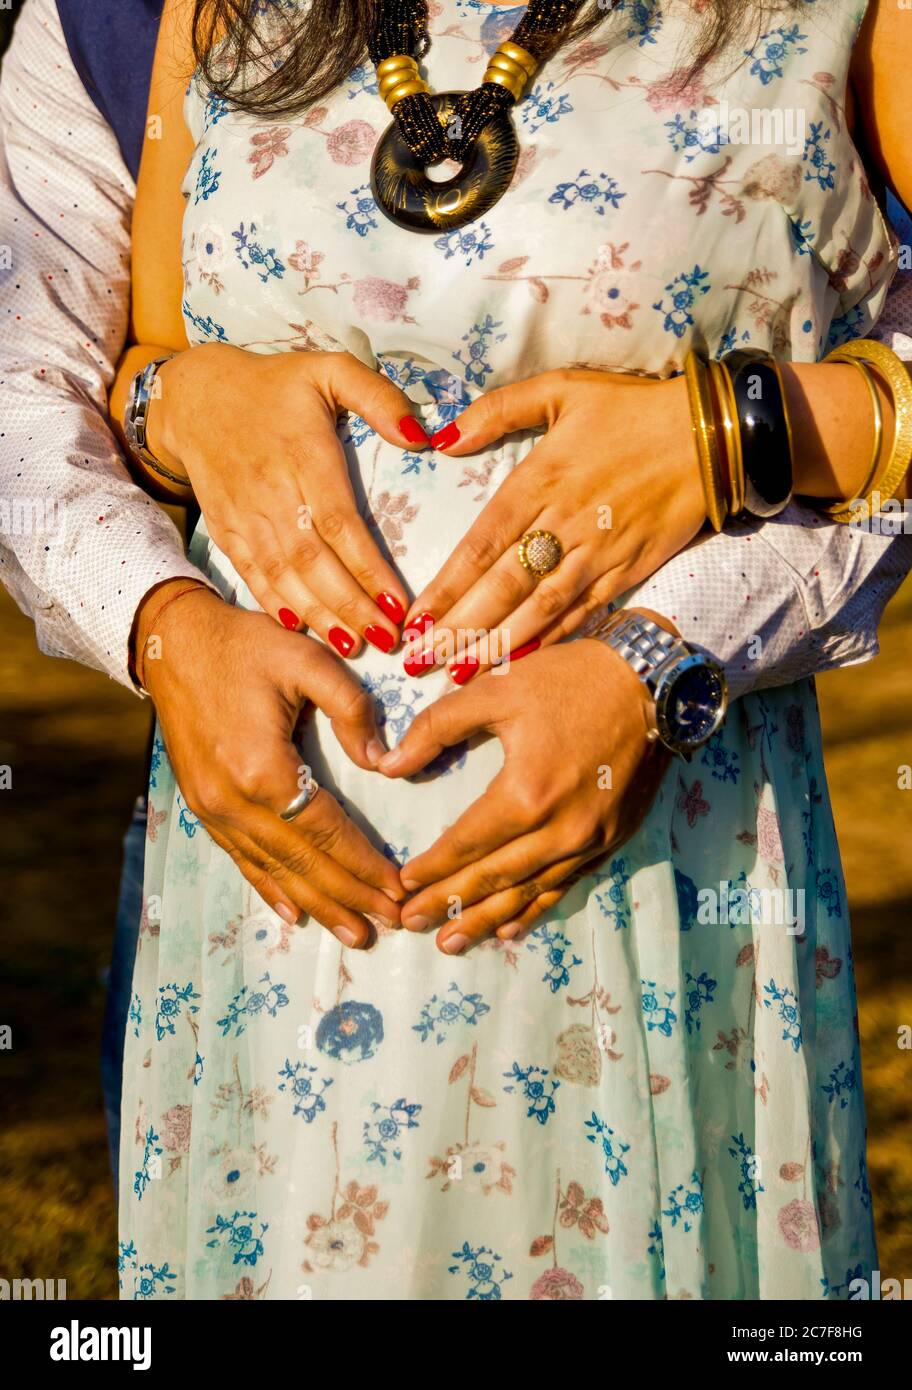 Atlanta Maternity Photographer | West Georgia Pregnancy Portraits